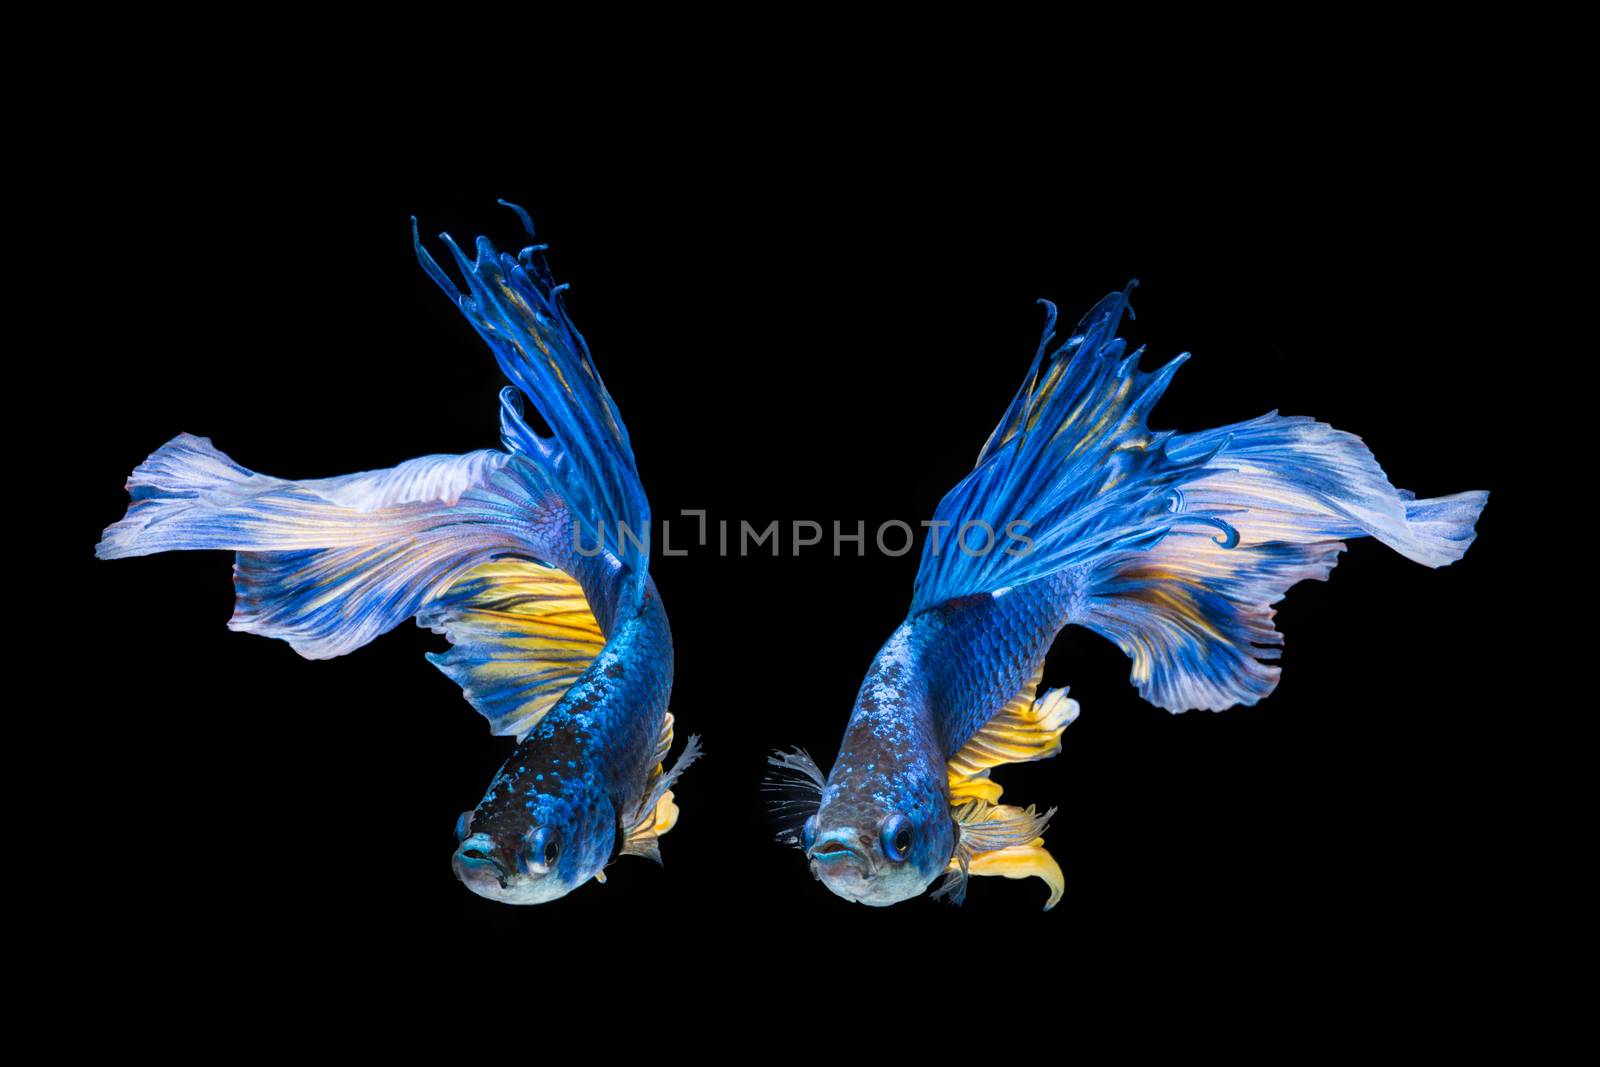 Blue and yellow betta fish, siamese fighting fish on black background